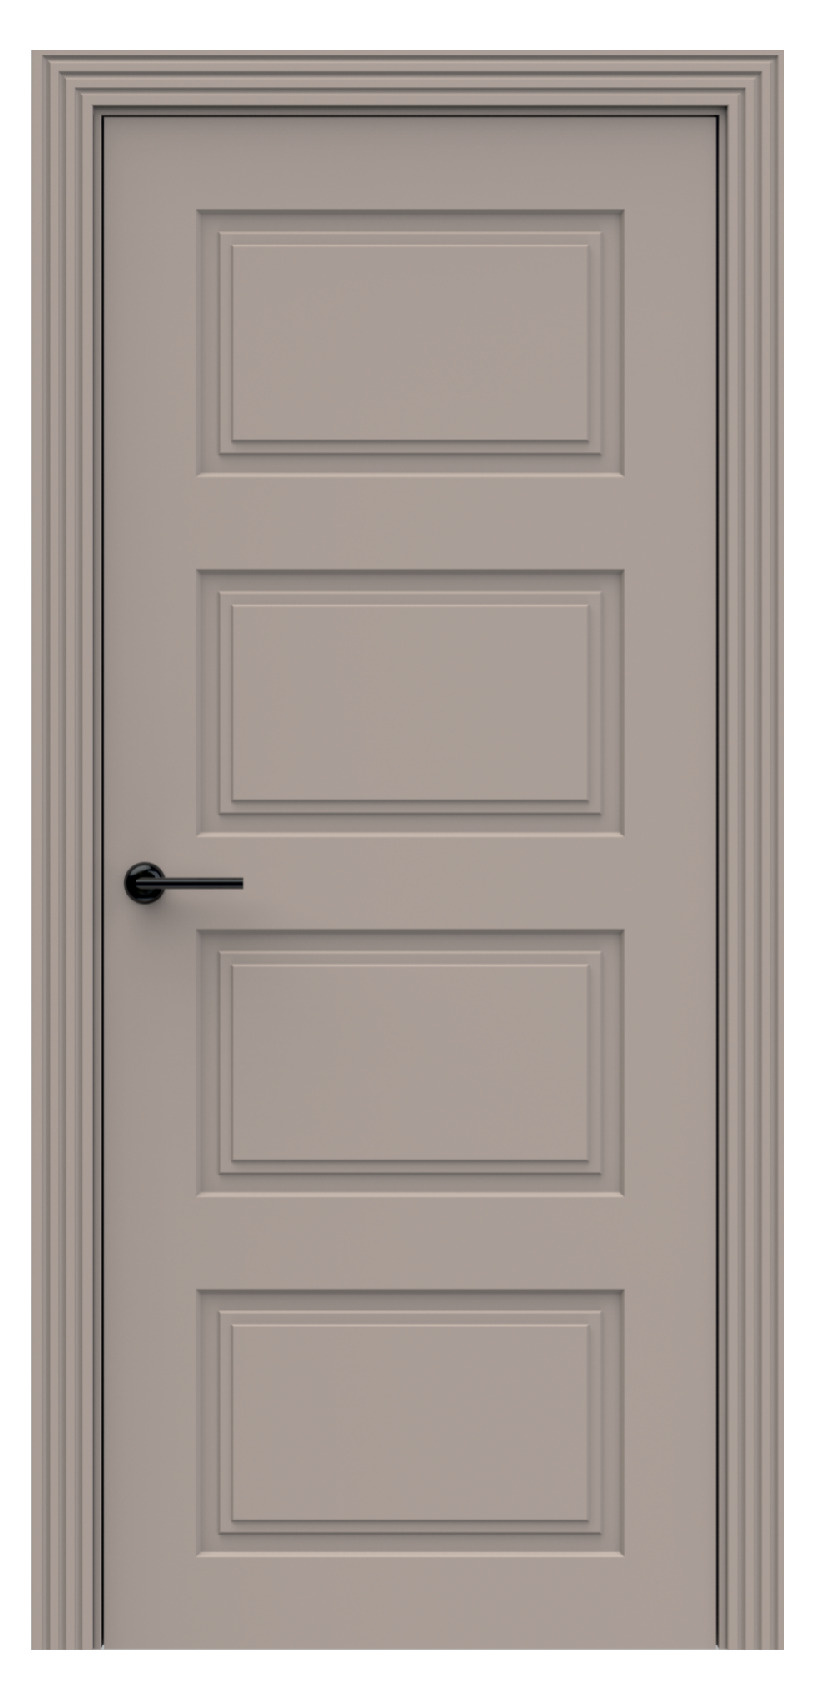 Questdoors Межкомнатная дверь QI11, арт. 17972 - фото №1